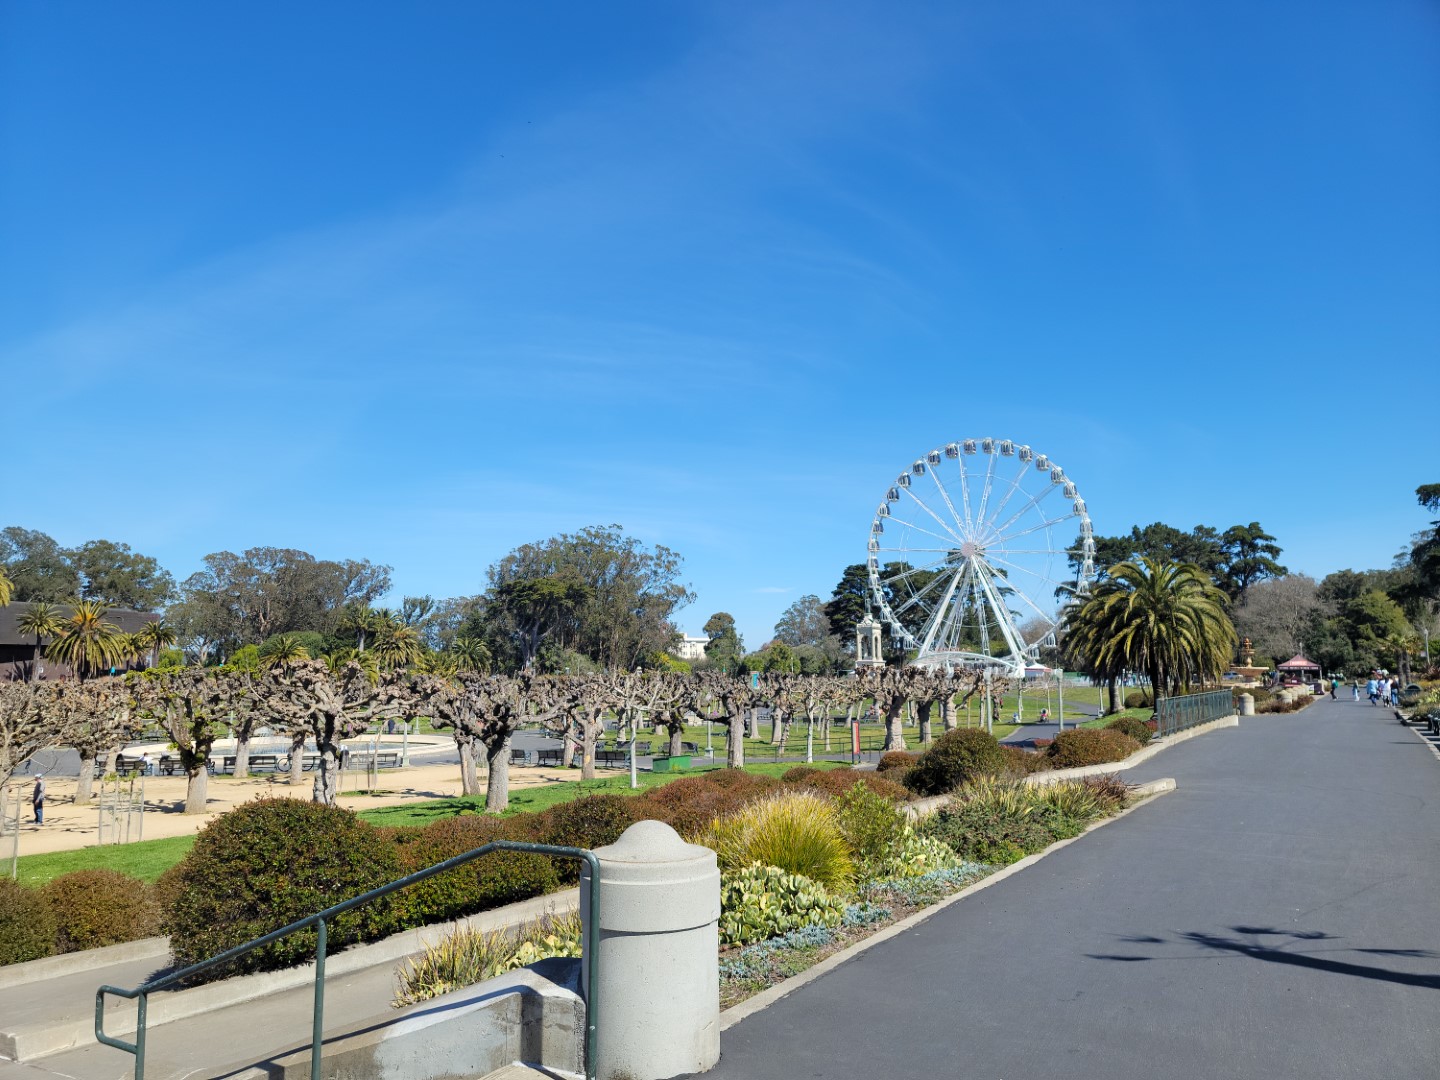 Golden Gate park ferris wheel in gardens